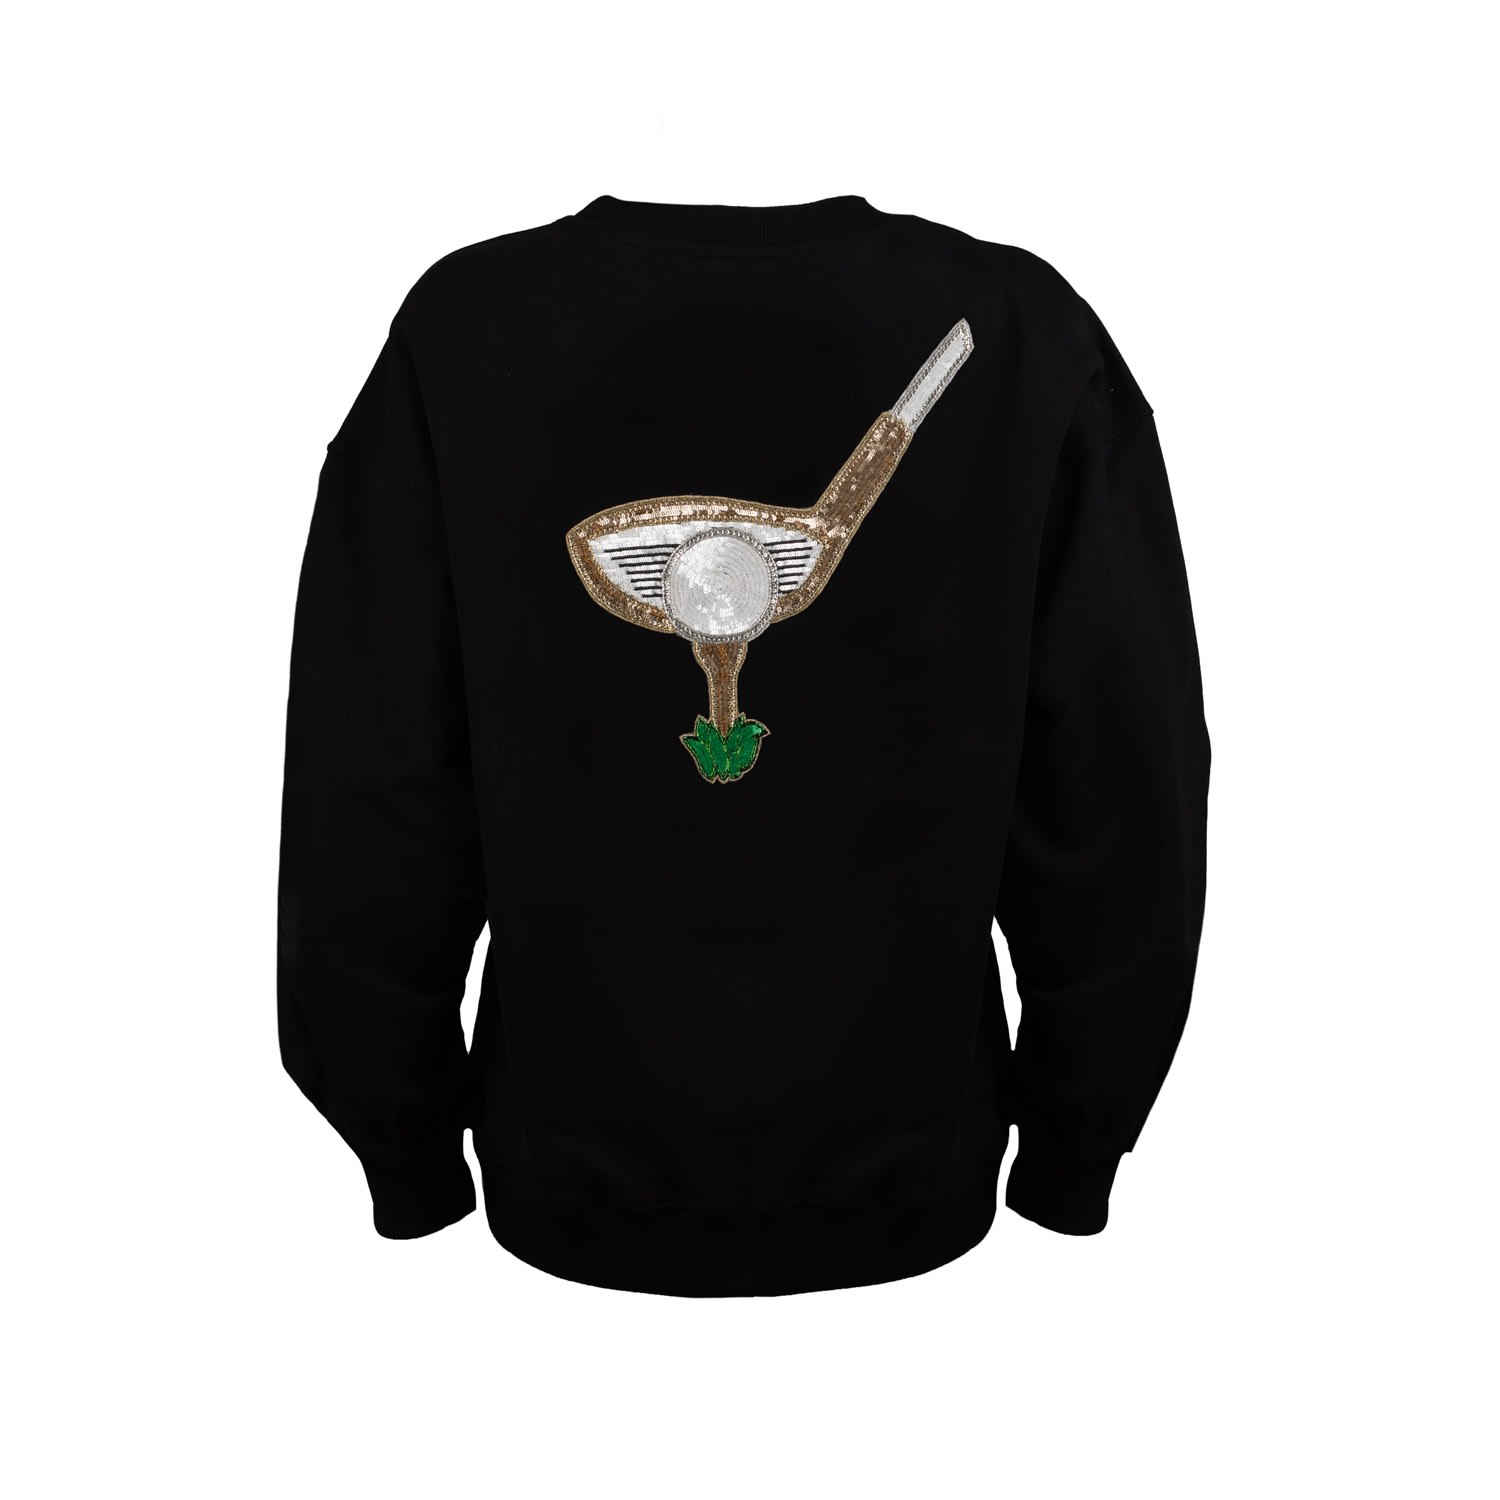 Laines London Women's Embellished Golf Sweatshirt - Black